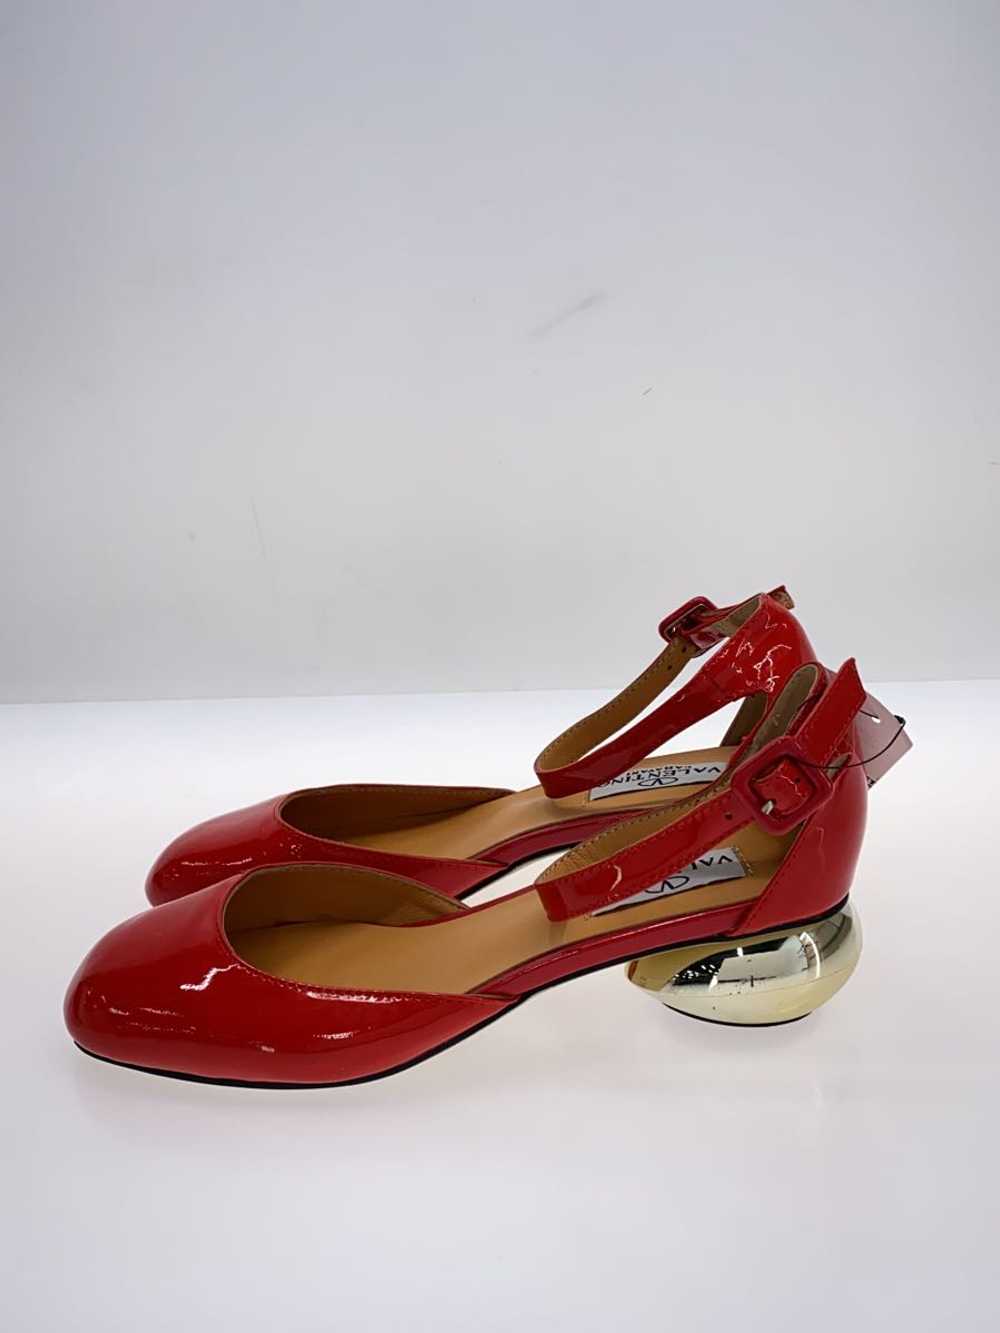 Valentino Garavani Pumps/38/Red/Enamel Shoes BiI84 - image 1